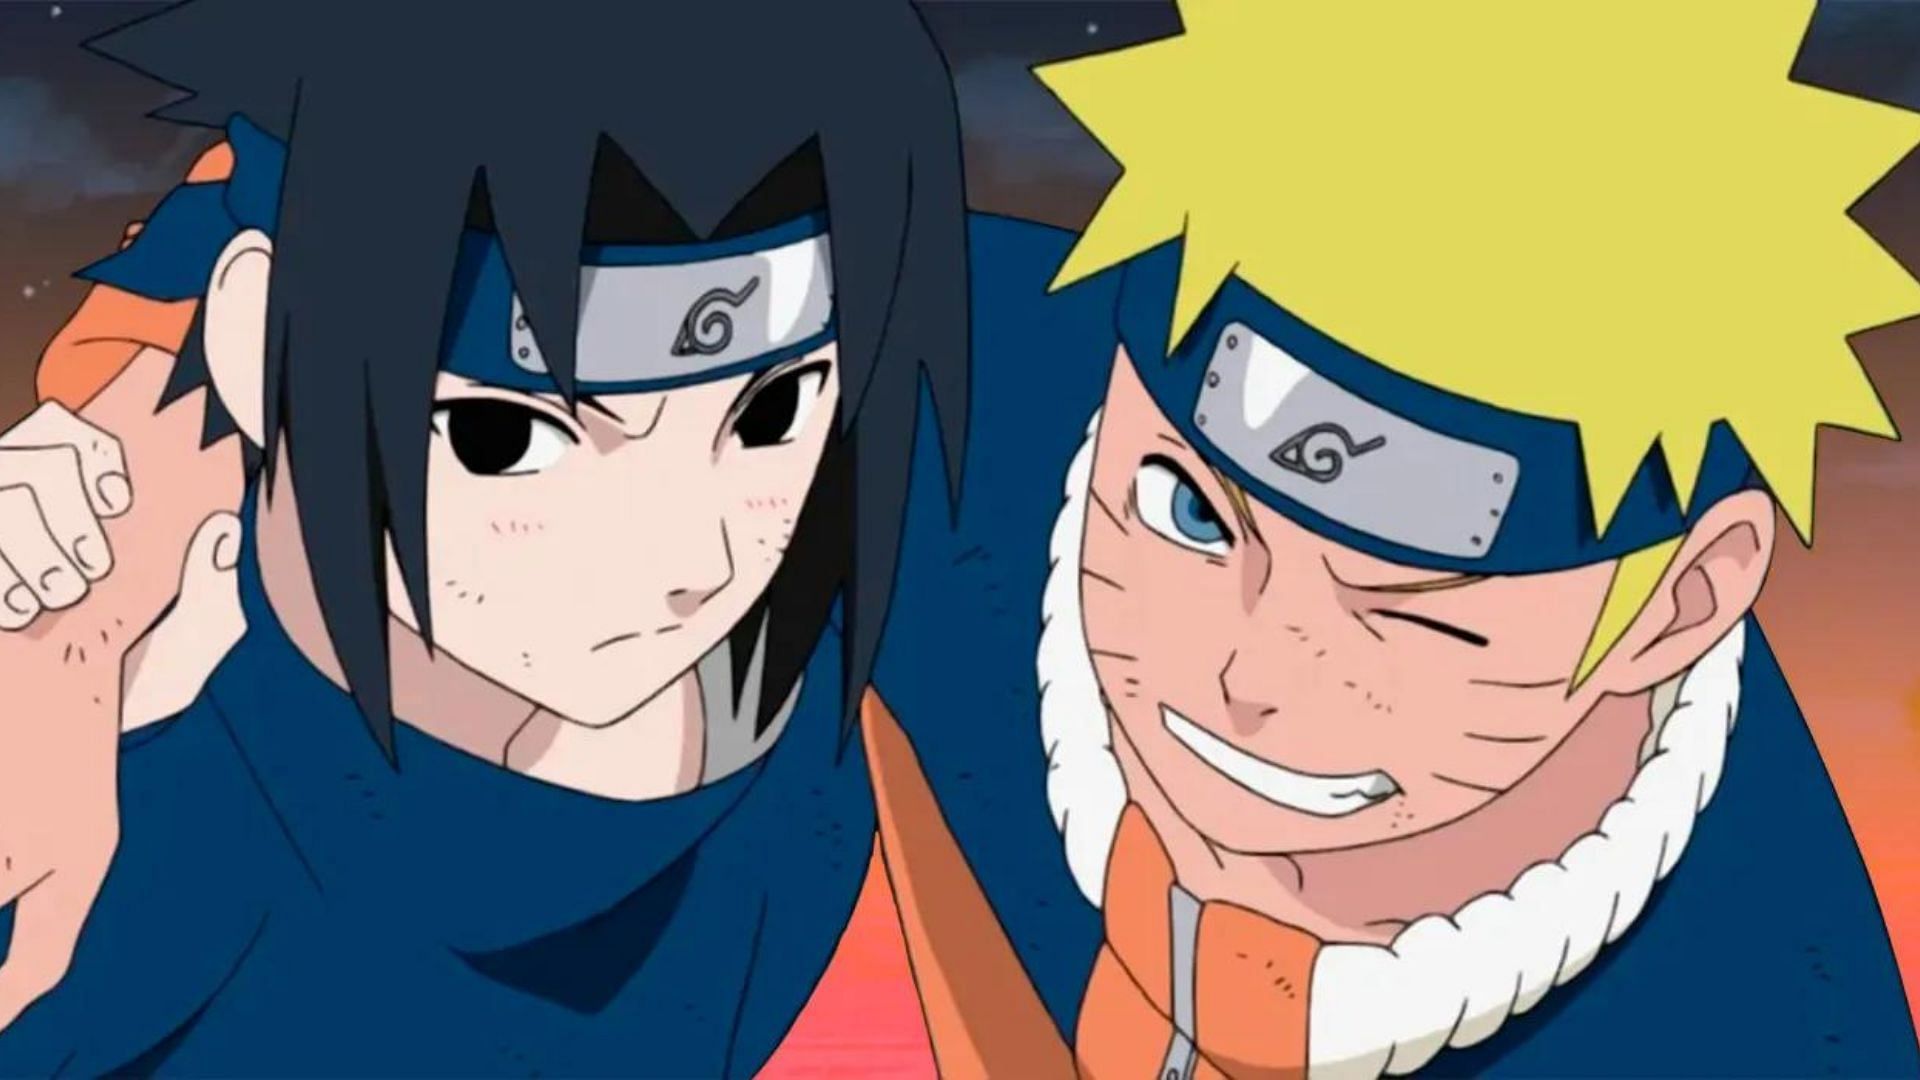 Naruto and Sasuke as seen in the Naruto anime (Image via Studio Pierrot)